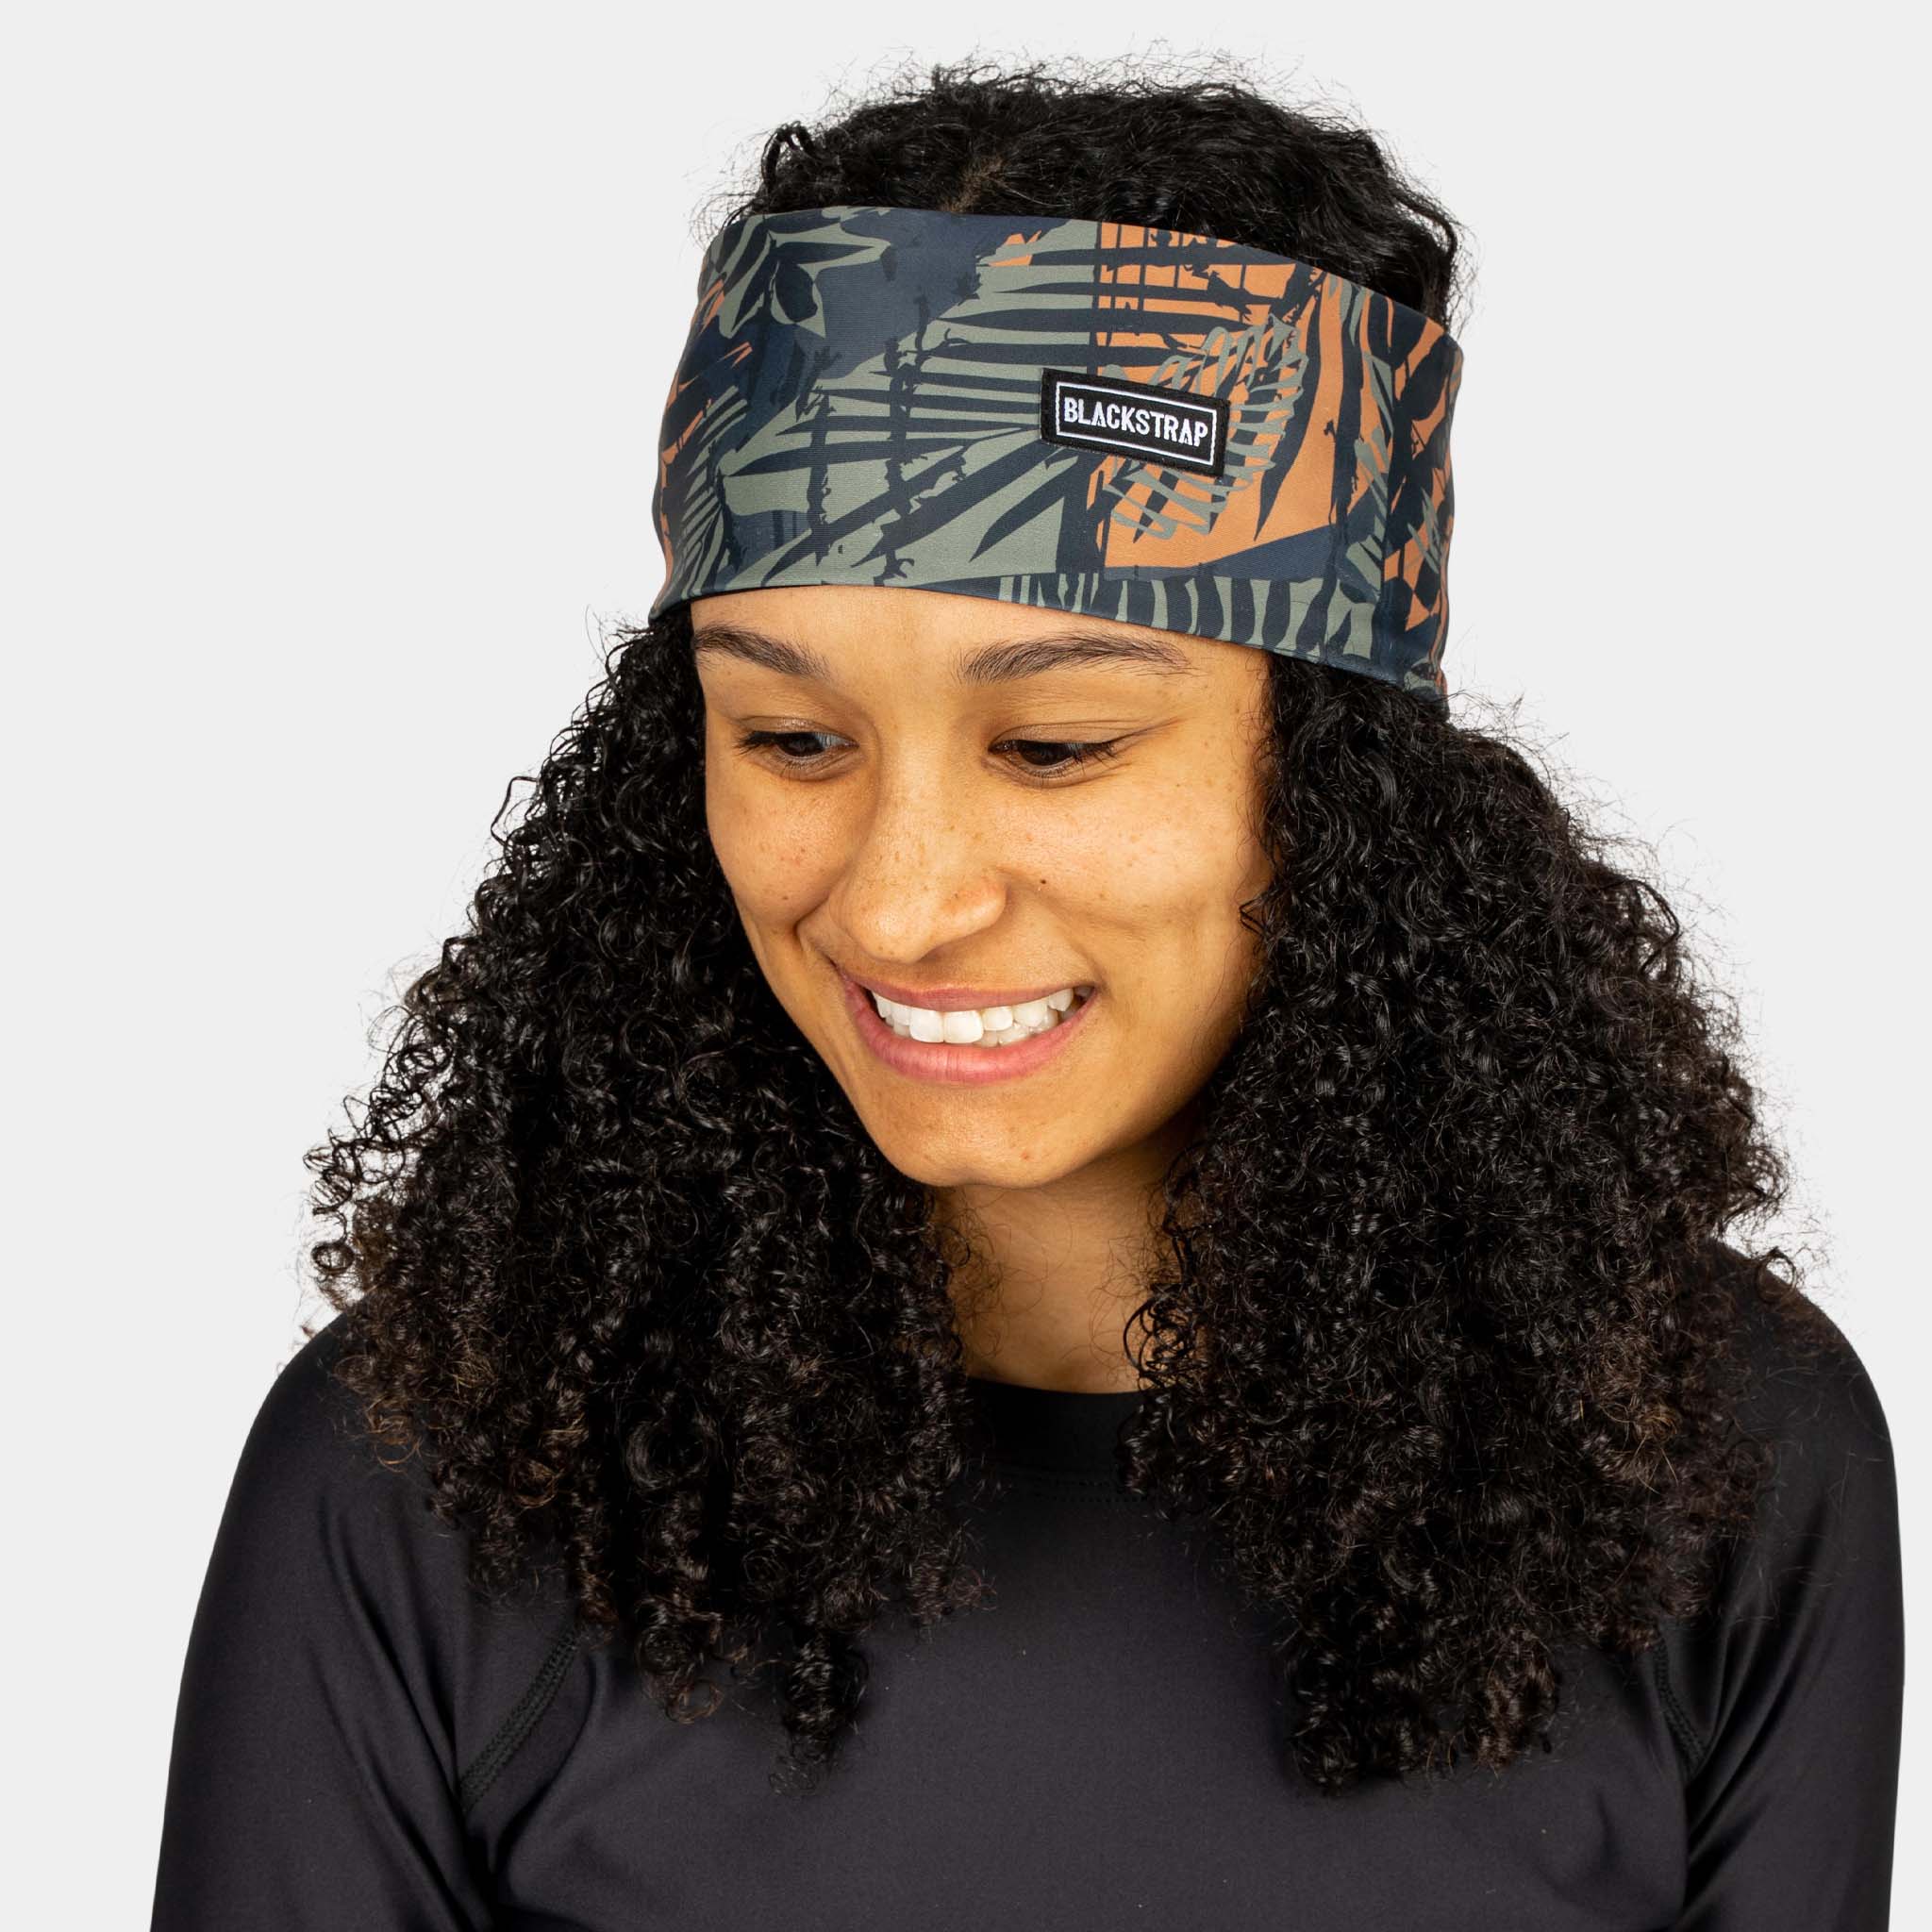 Snowbird Dual Layer Headband BlackStrap #color_safari juniper